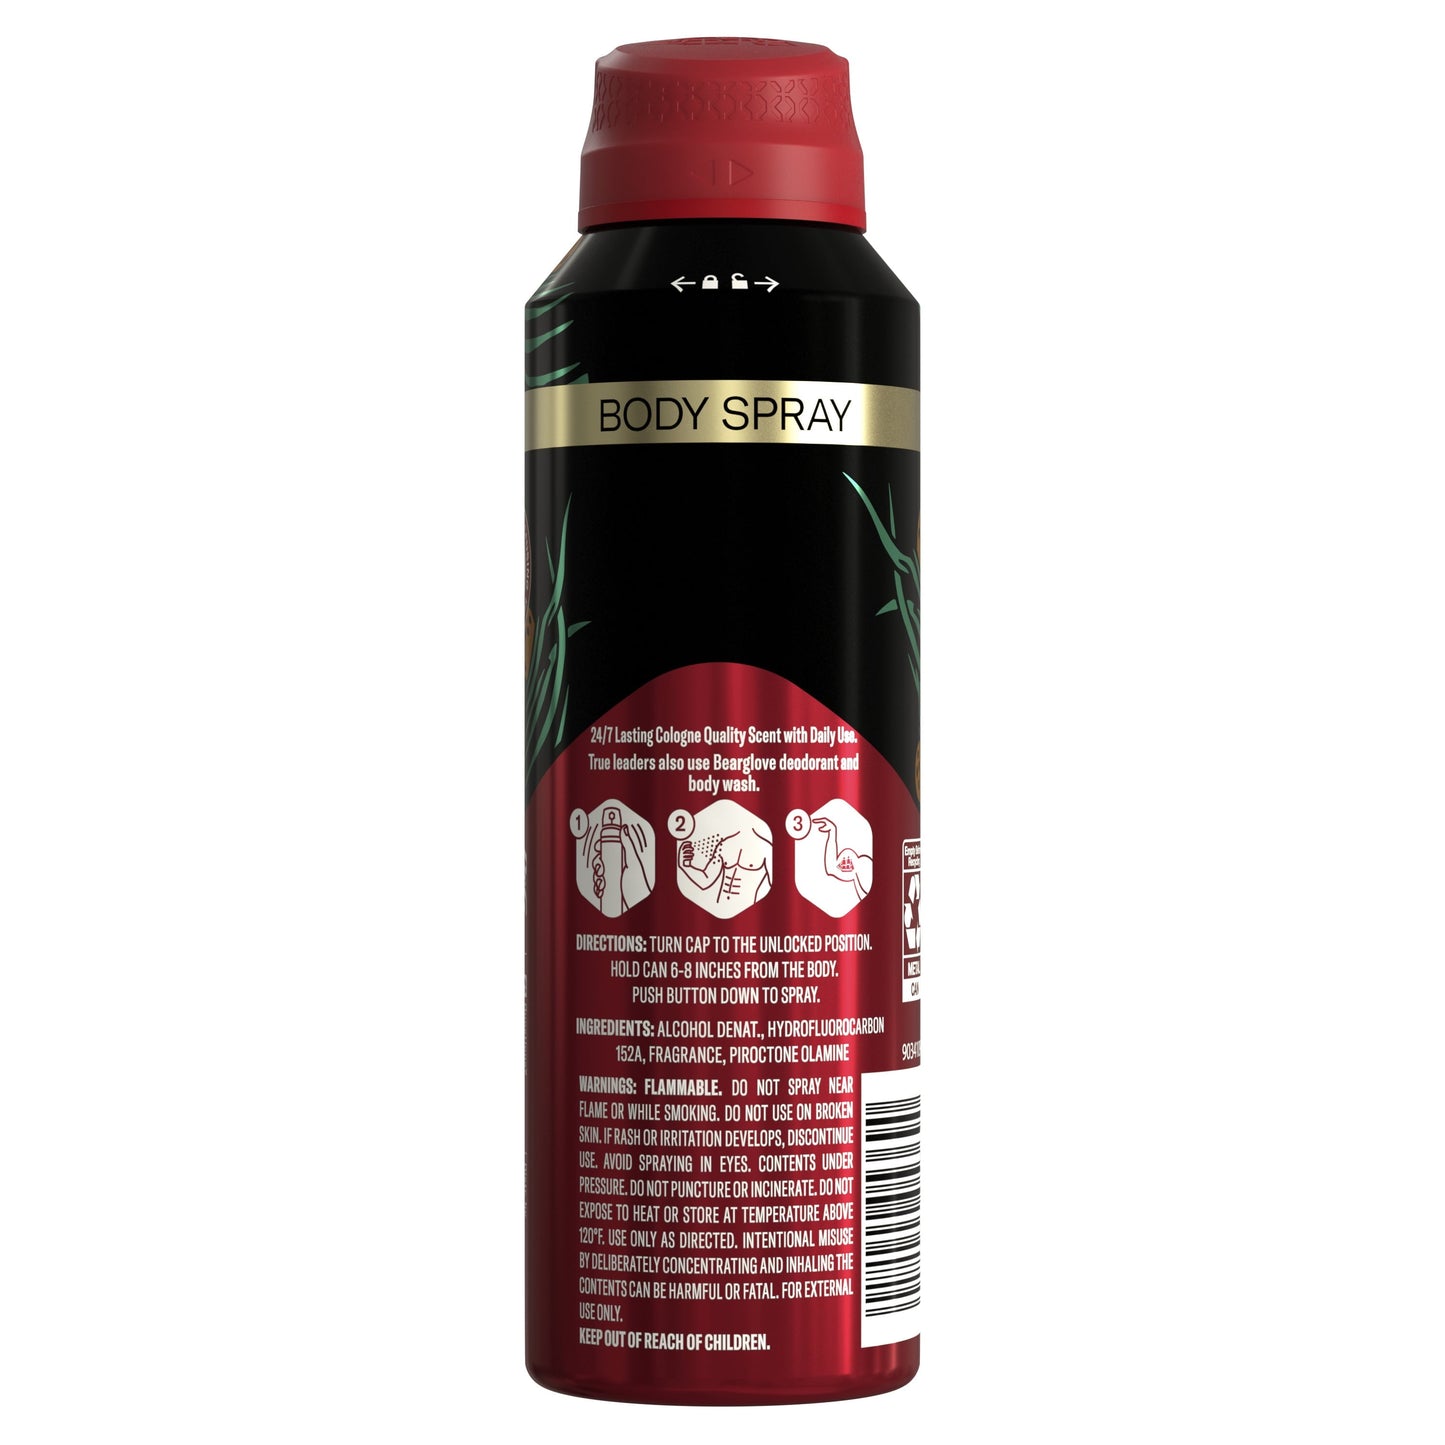 Old Spice Bearglove Body Spray for Men, 5.1 oz